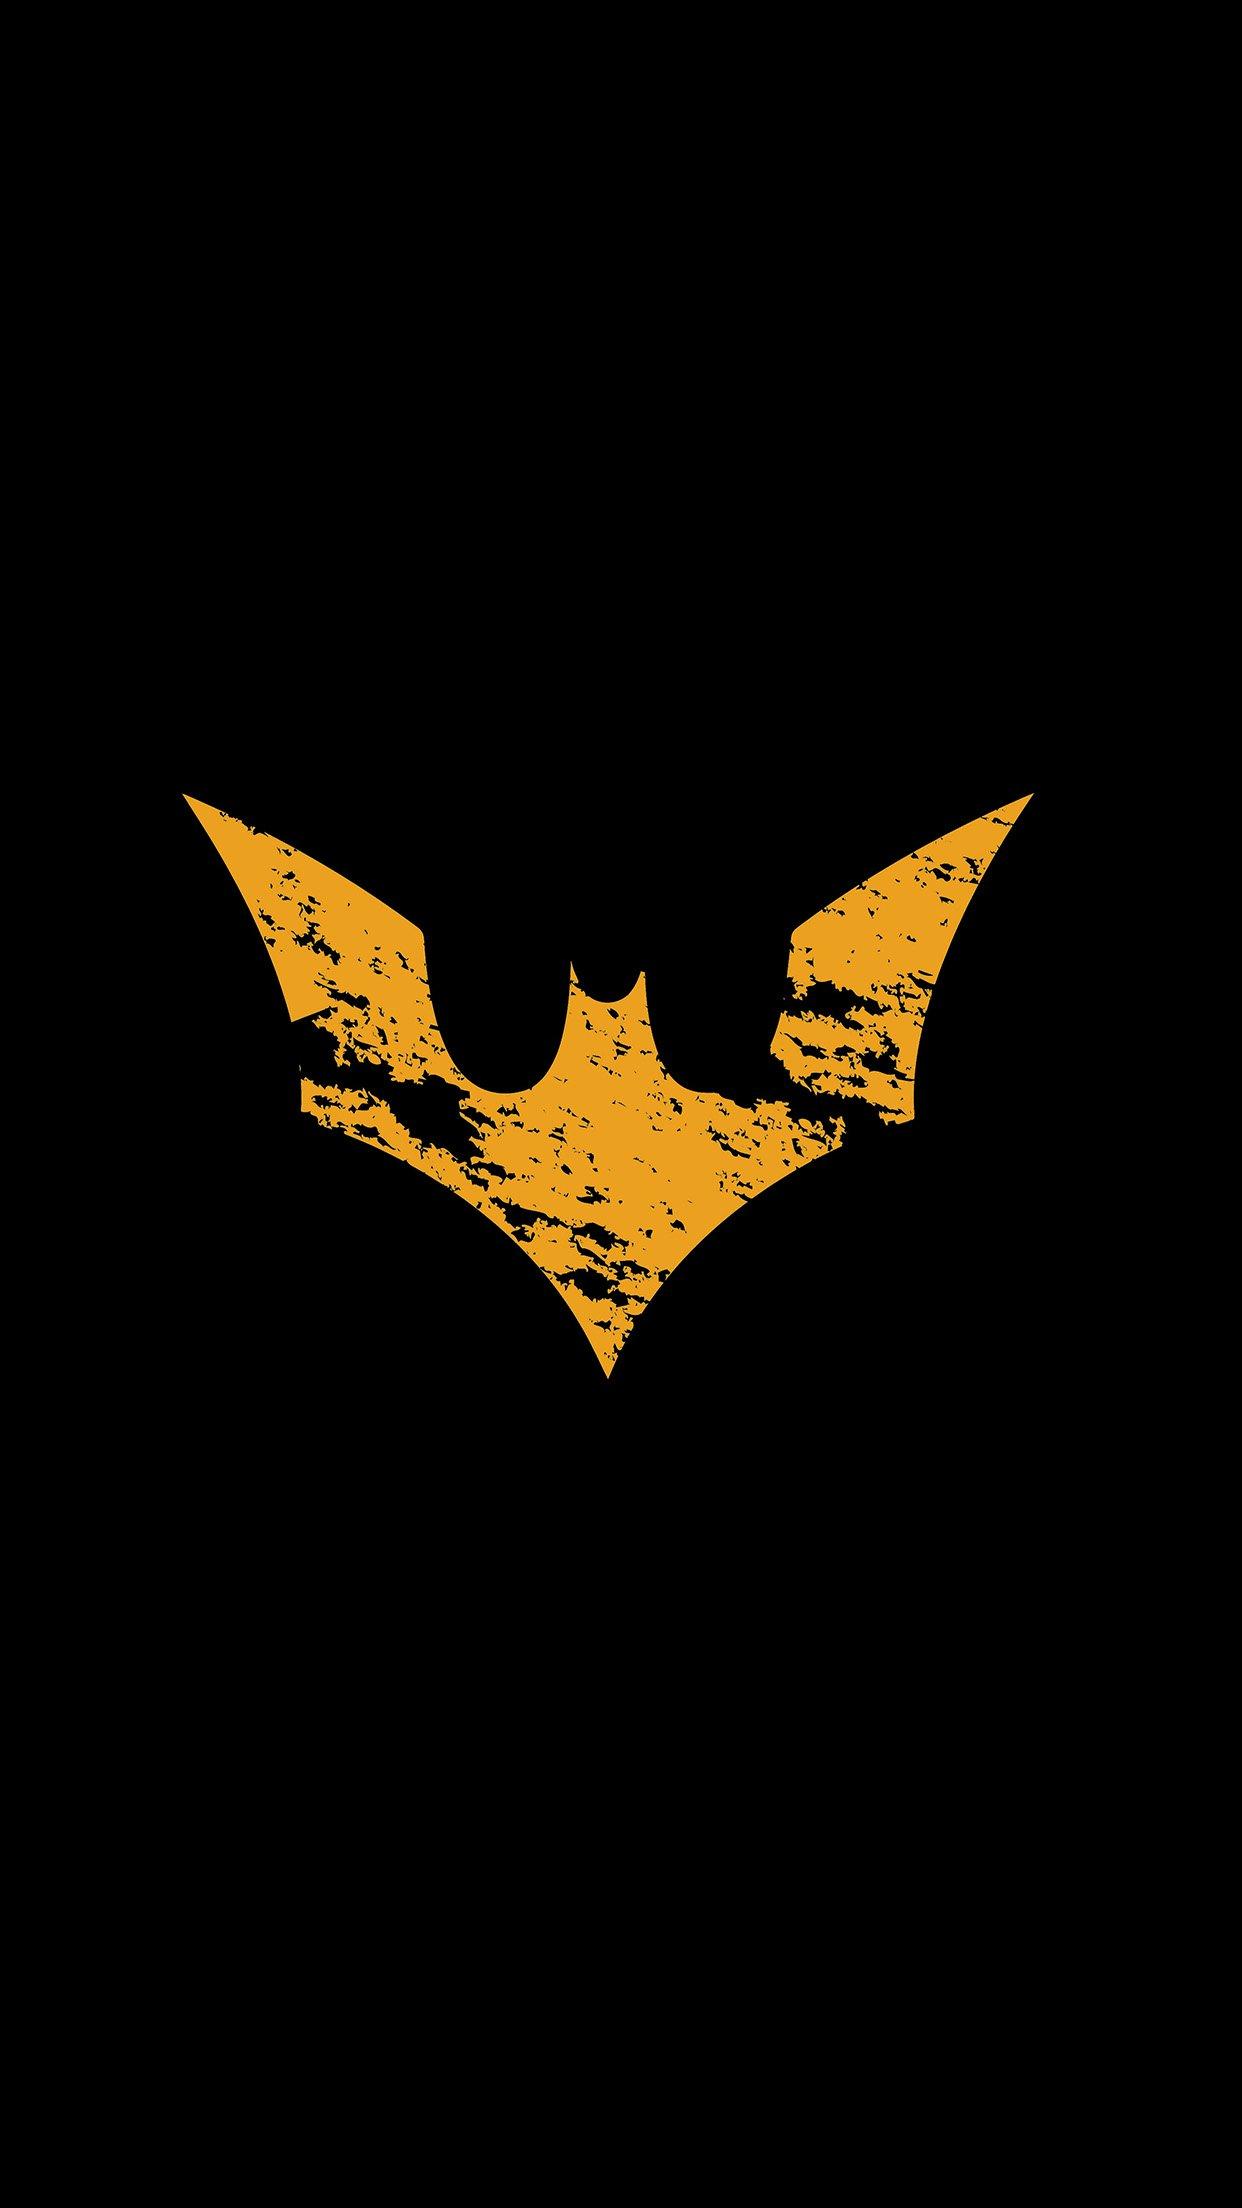 iPhone wallpaper. batman logo